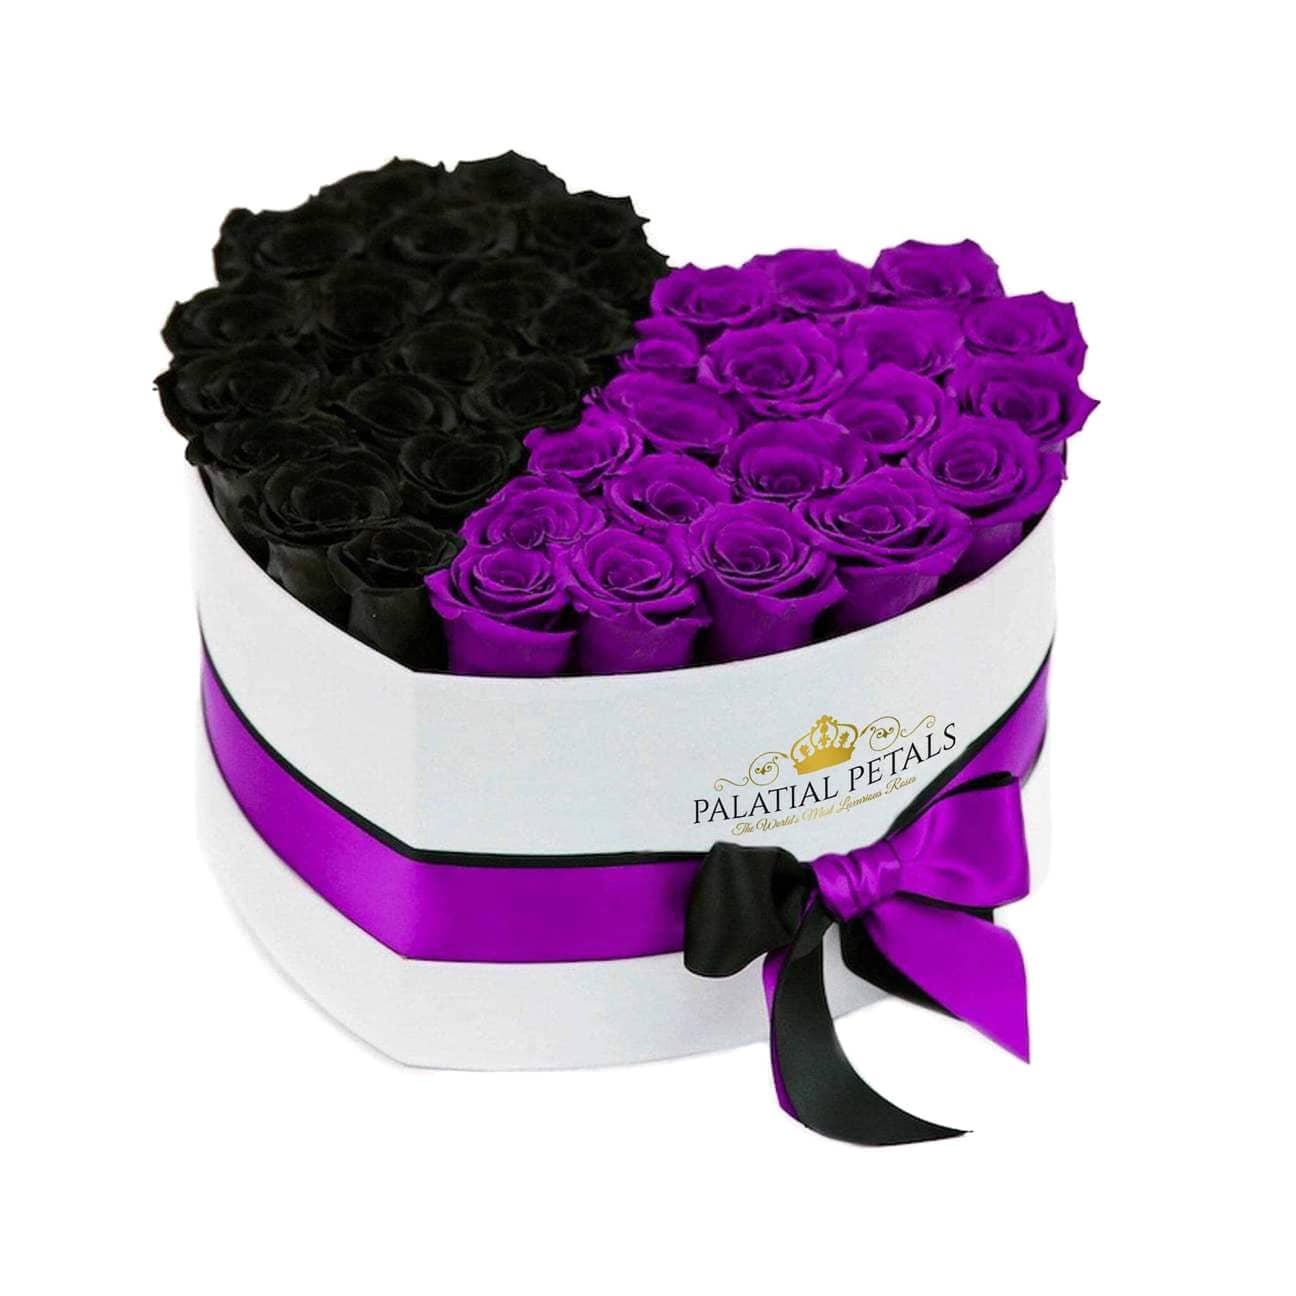 Black & Purple Roses That Last A Year - Love Heart Box